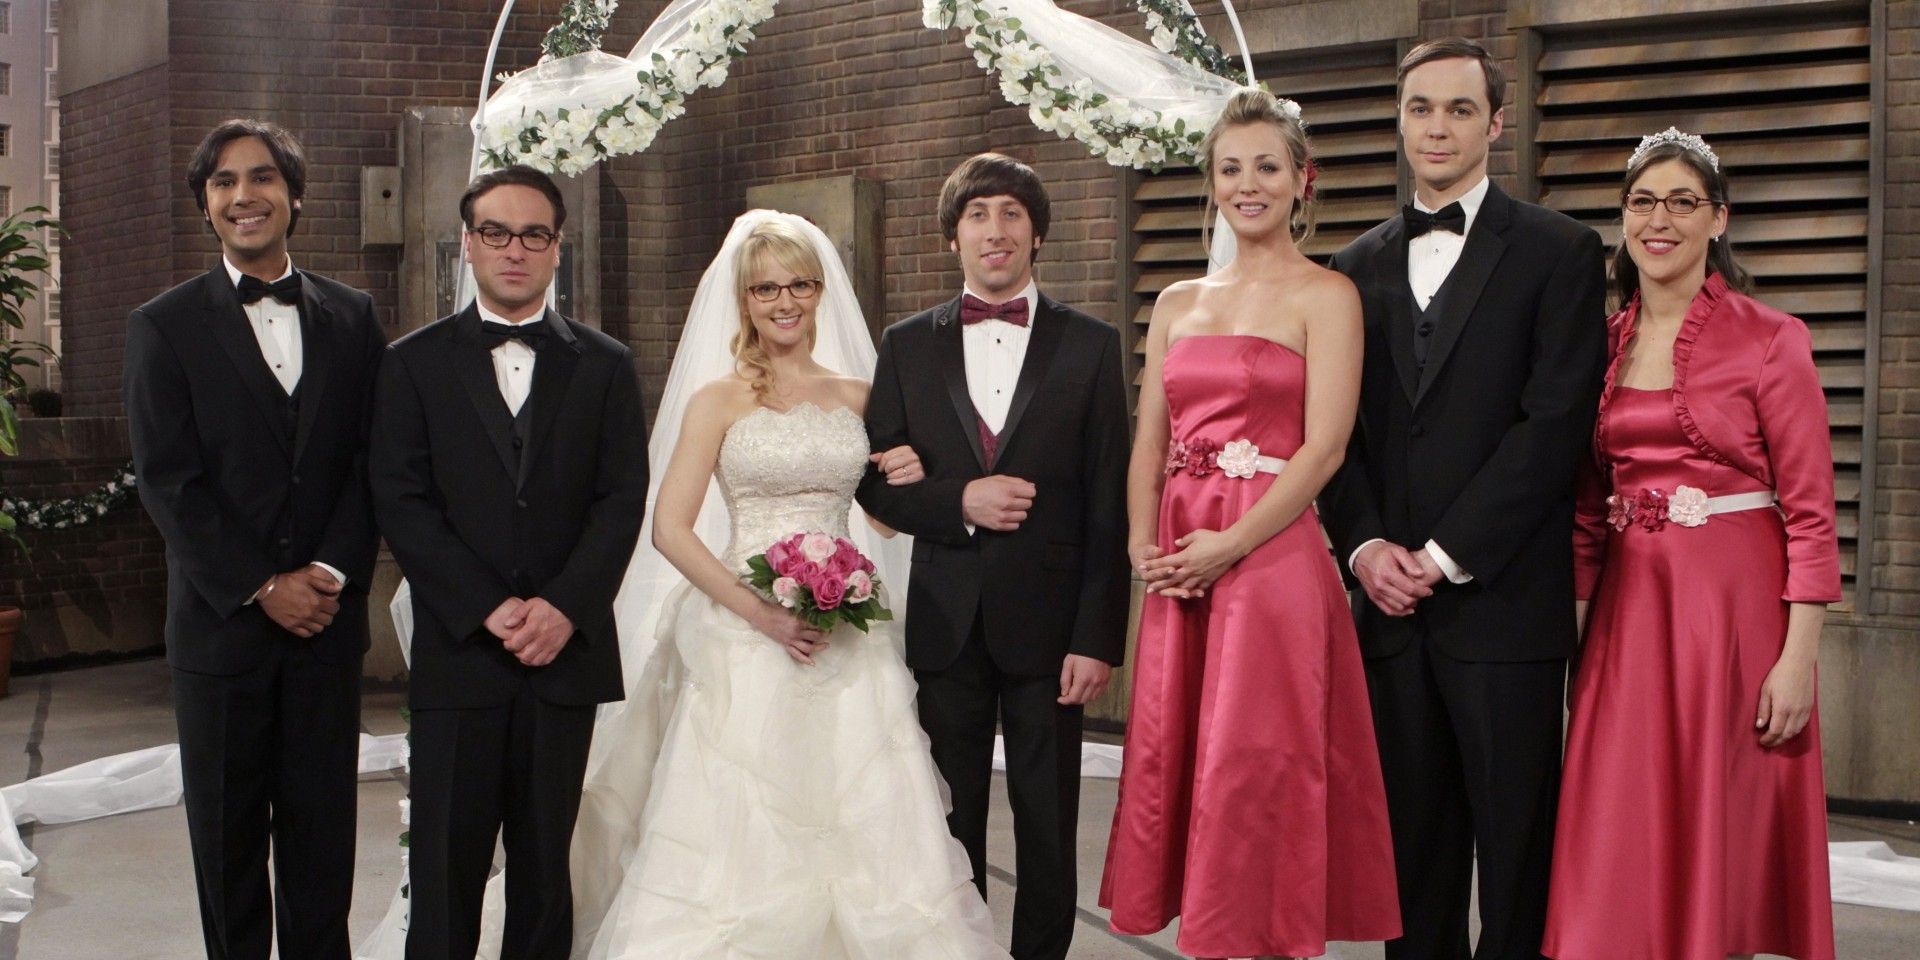 Raj, Leonard, Bernadette, Howard, Penny, Sheldon and Amy at Bernadette and Howard's wedding